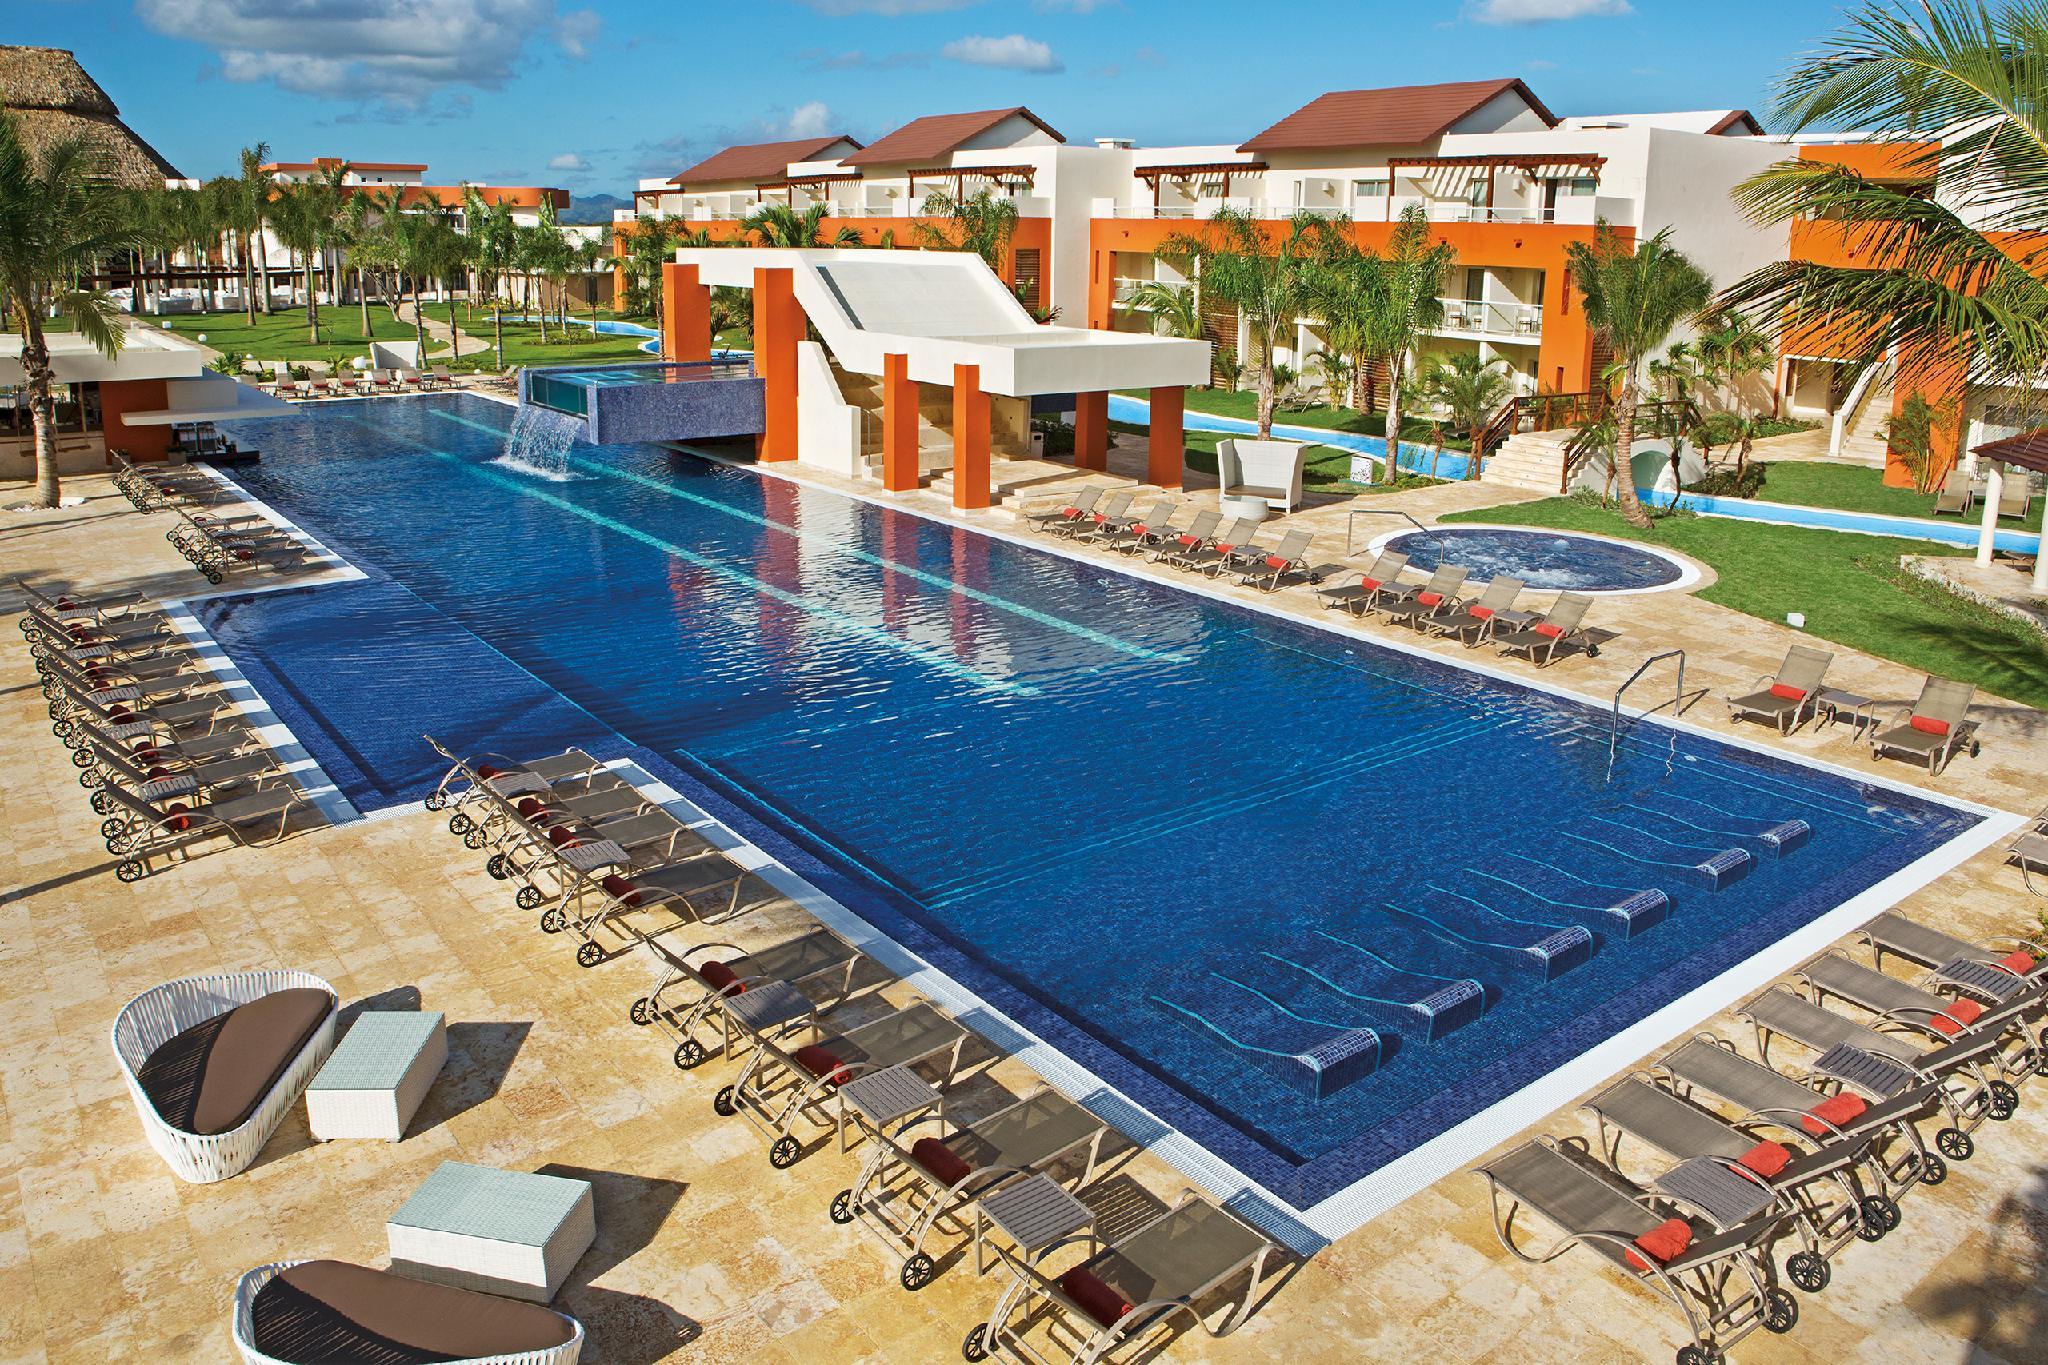 bianca filip recommends Dominican Republic Swinger Resort